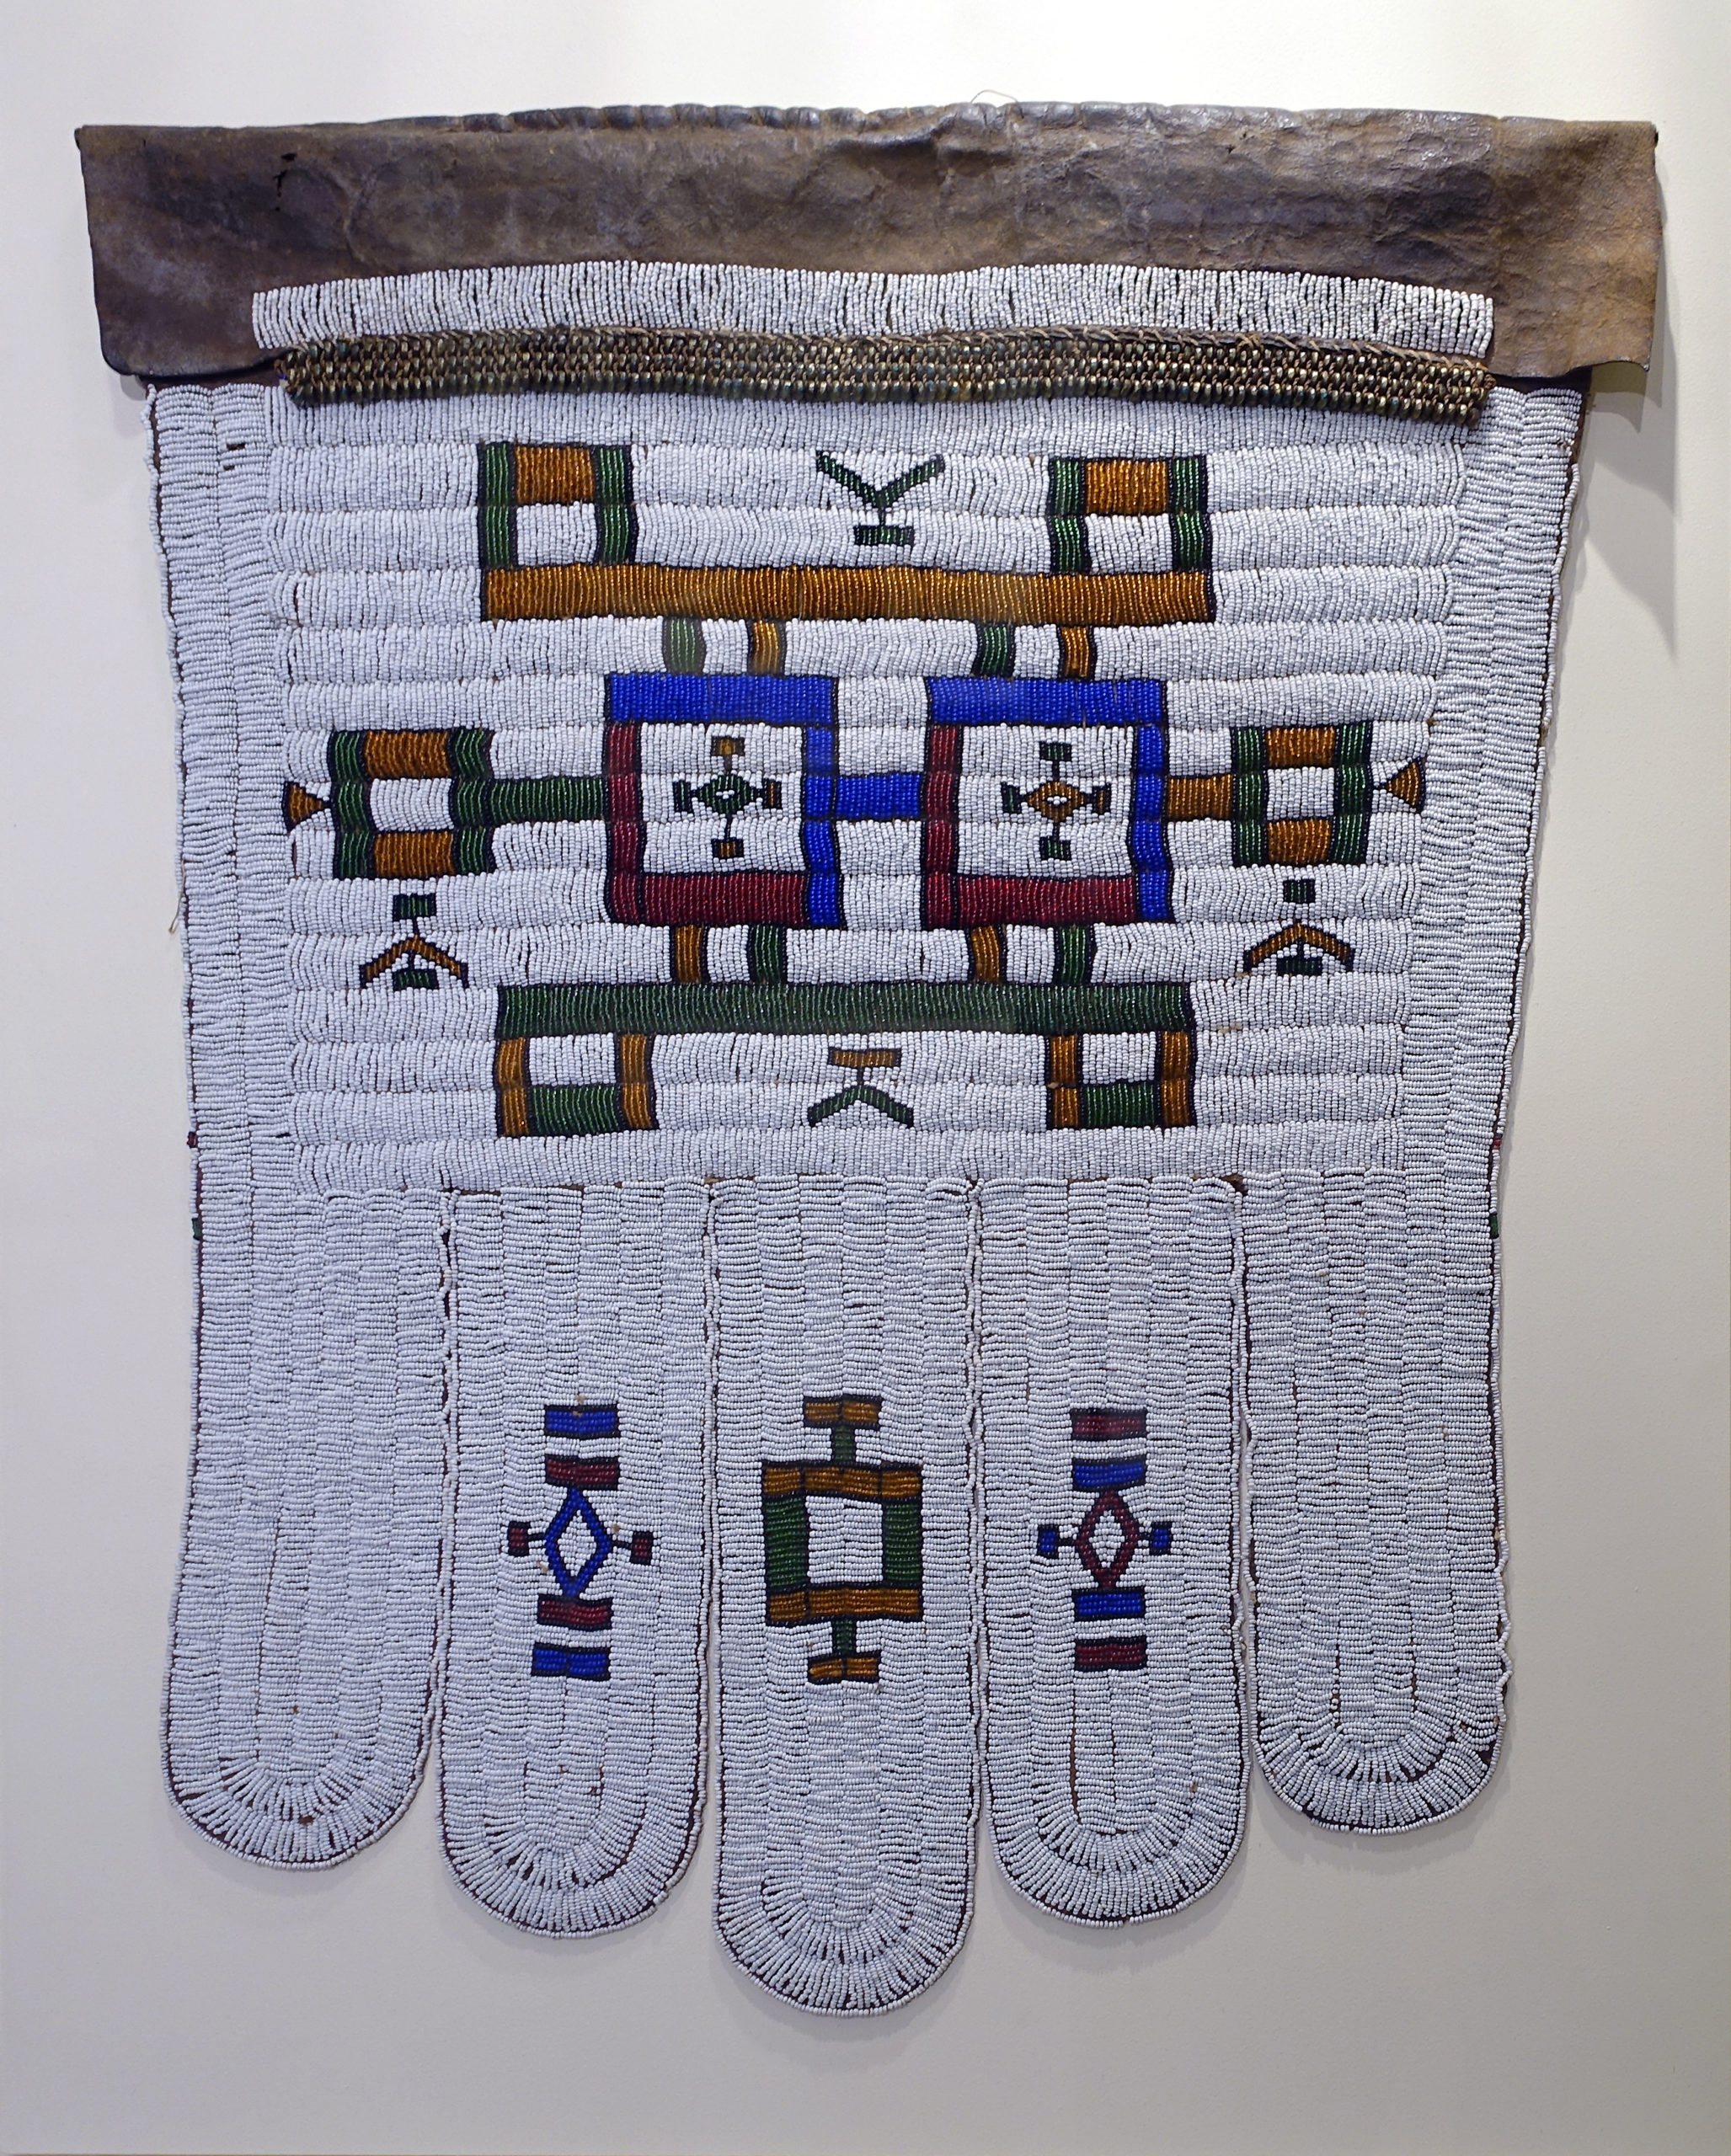 Ndelebe artist, Marriage apron (itjogolo or ijogolo), 1920–40 (Mpumwanga, South Africa), leather, glass beads, fabric (Newark Museum of Art)